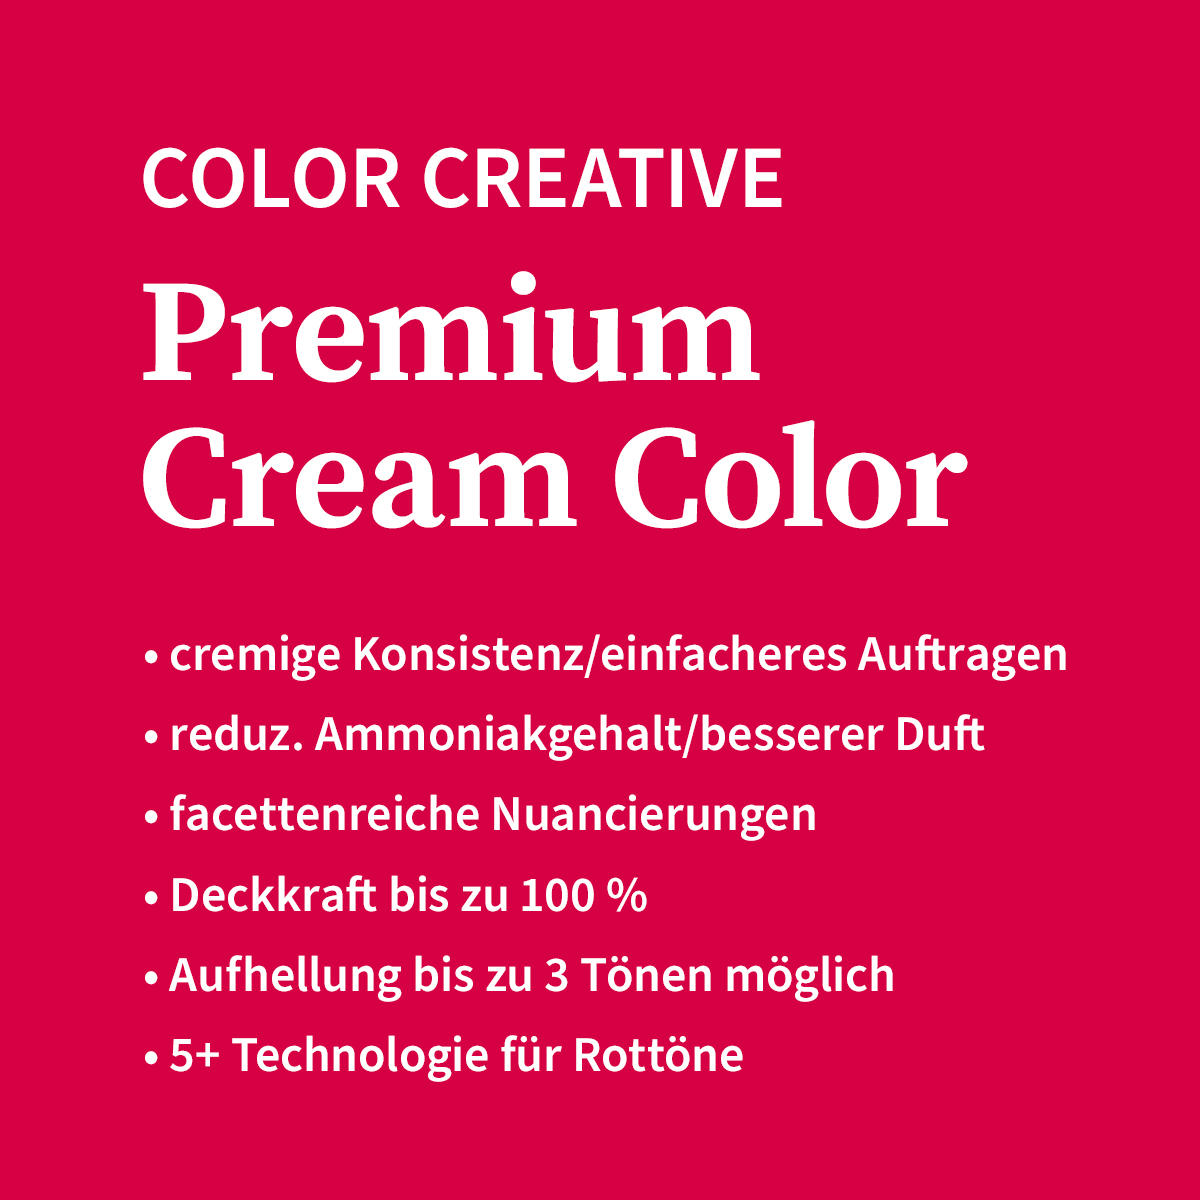 Basler Color Creative Premium Cream Color 10/6 lichtblond violett, Tube 60 ml - 4